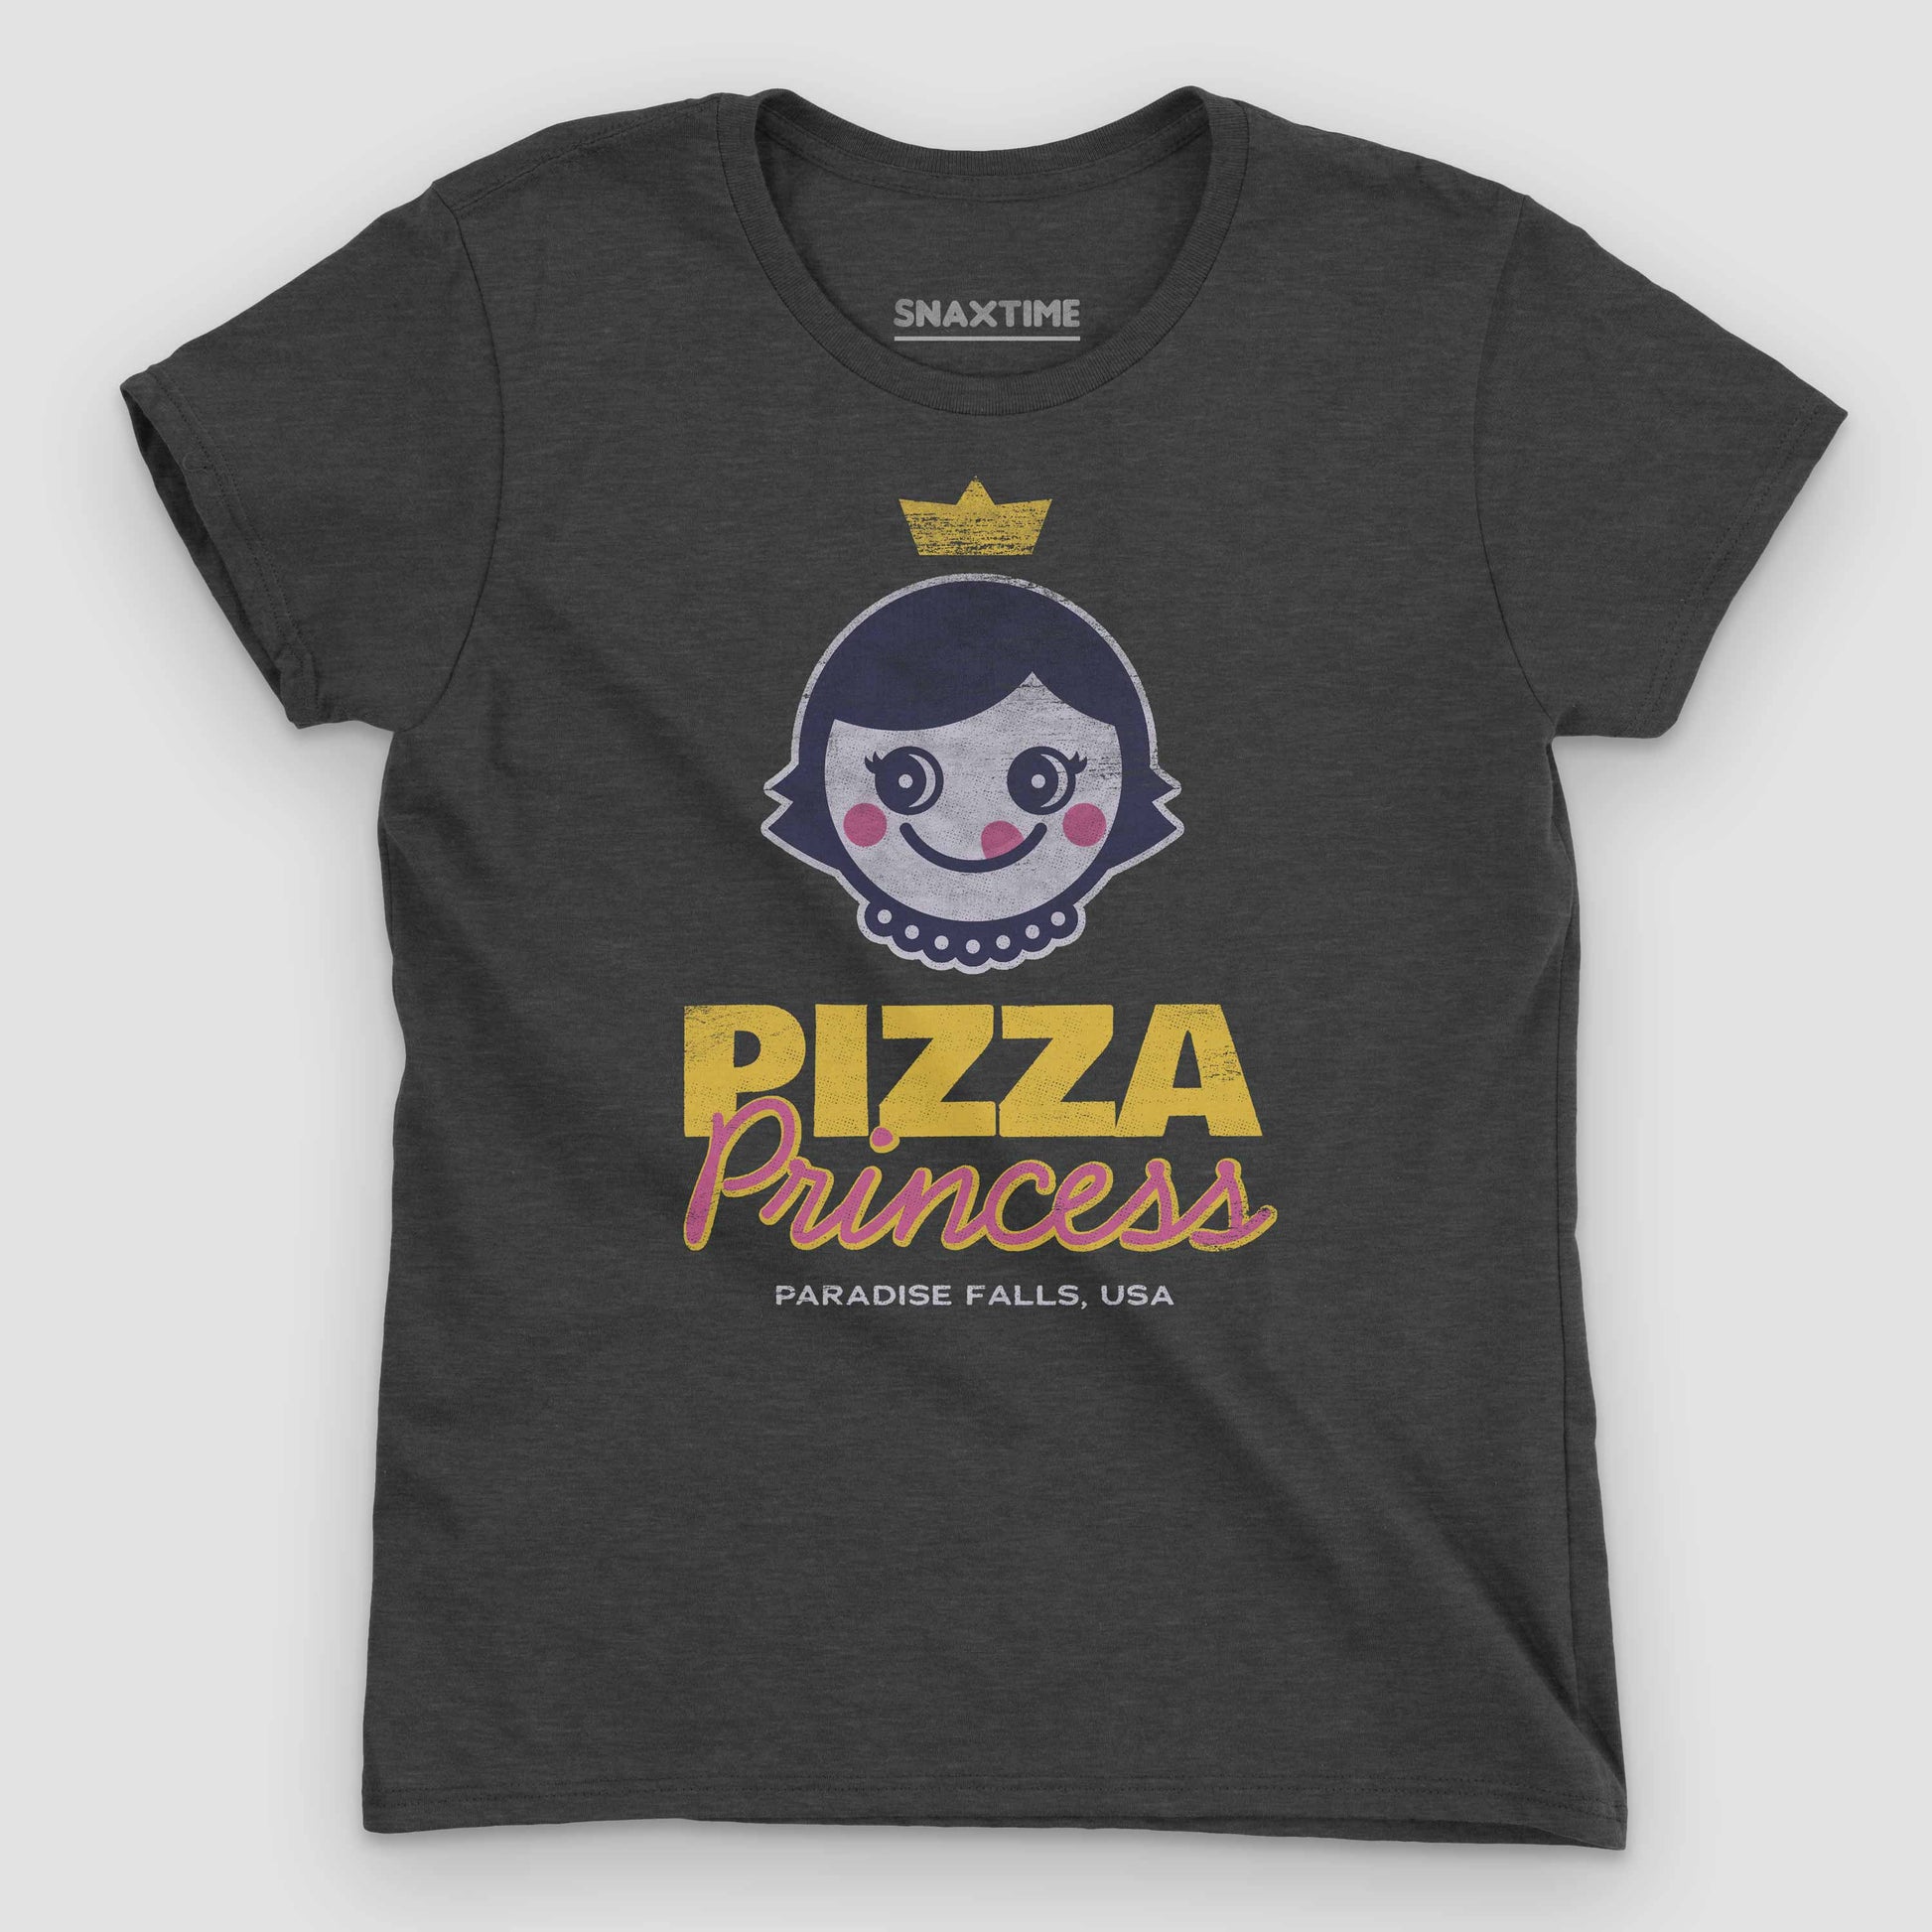 Heather Dark Grey Pizza Princess Women's Graphic T-Shirt by Snaxtime